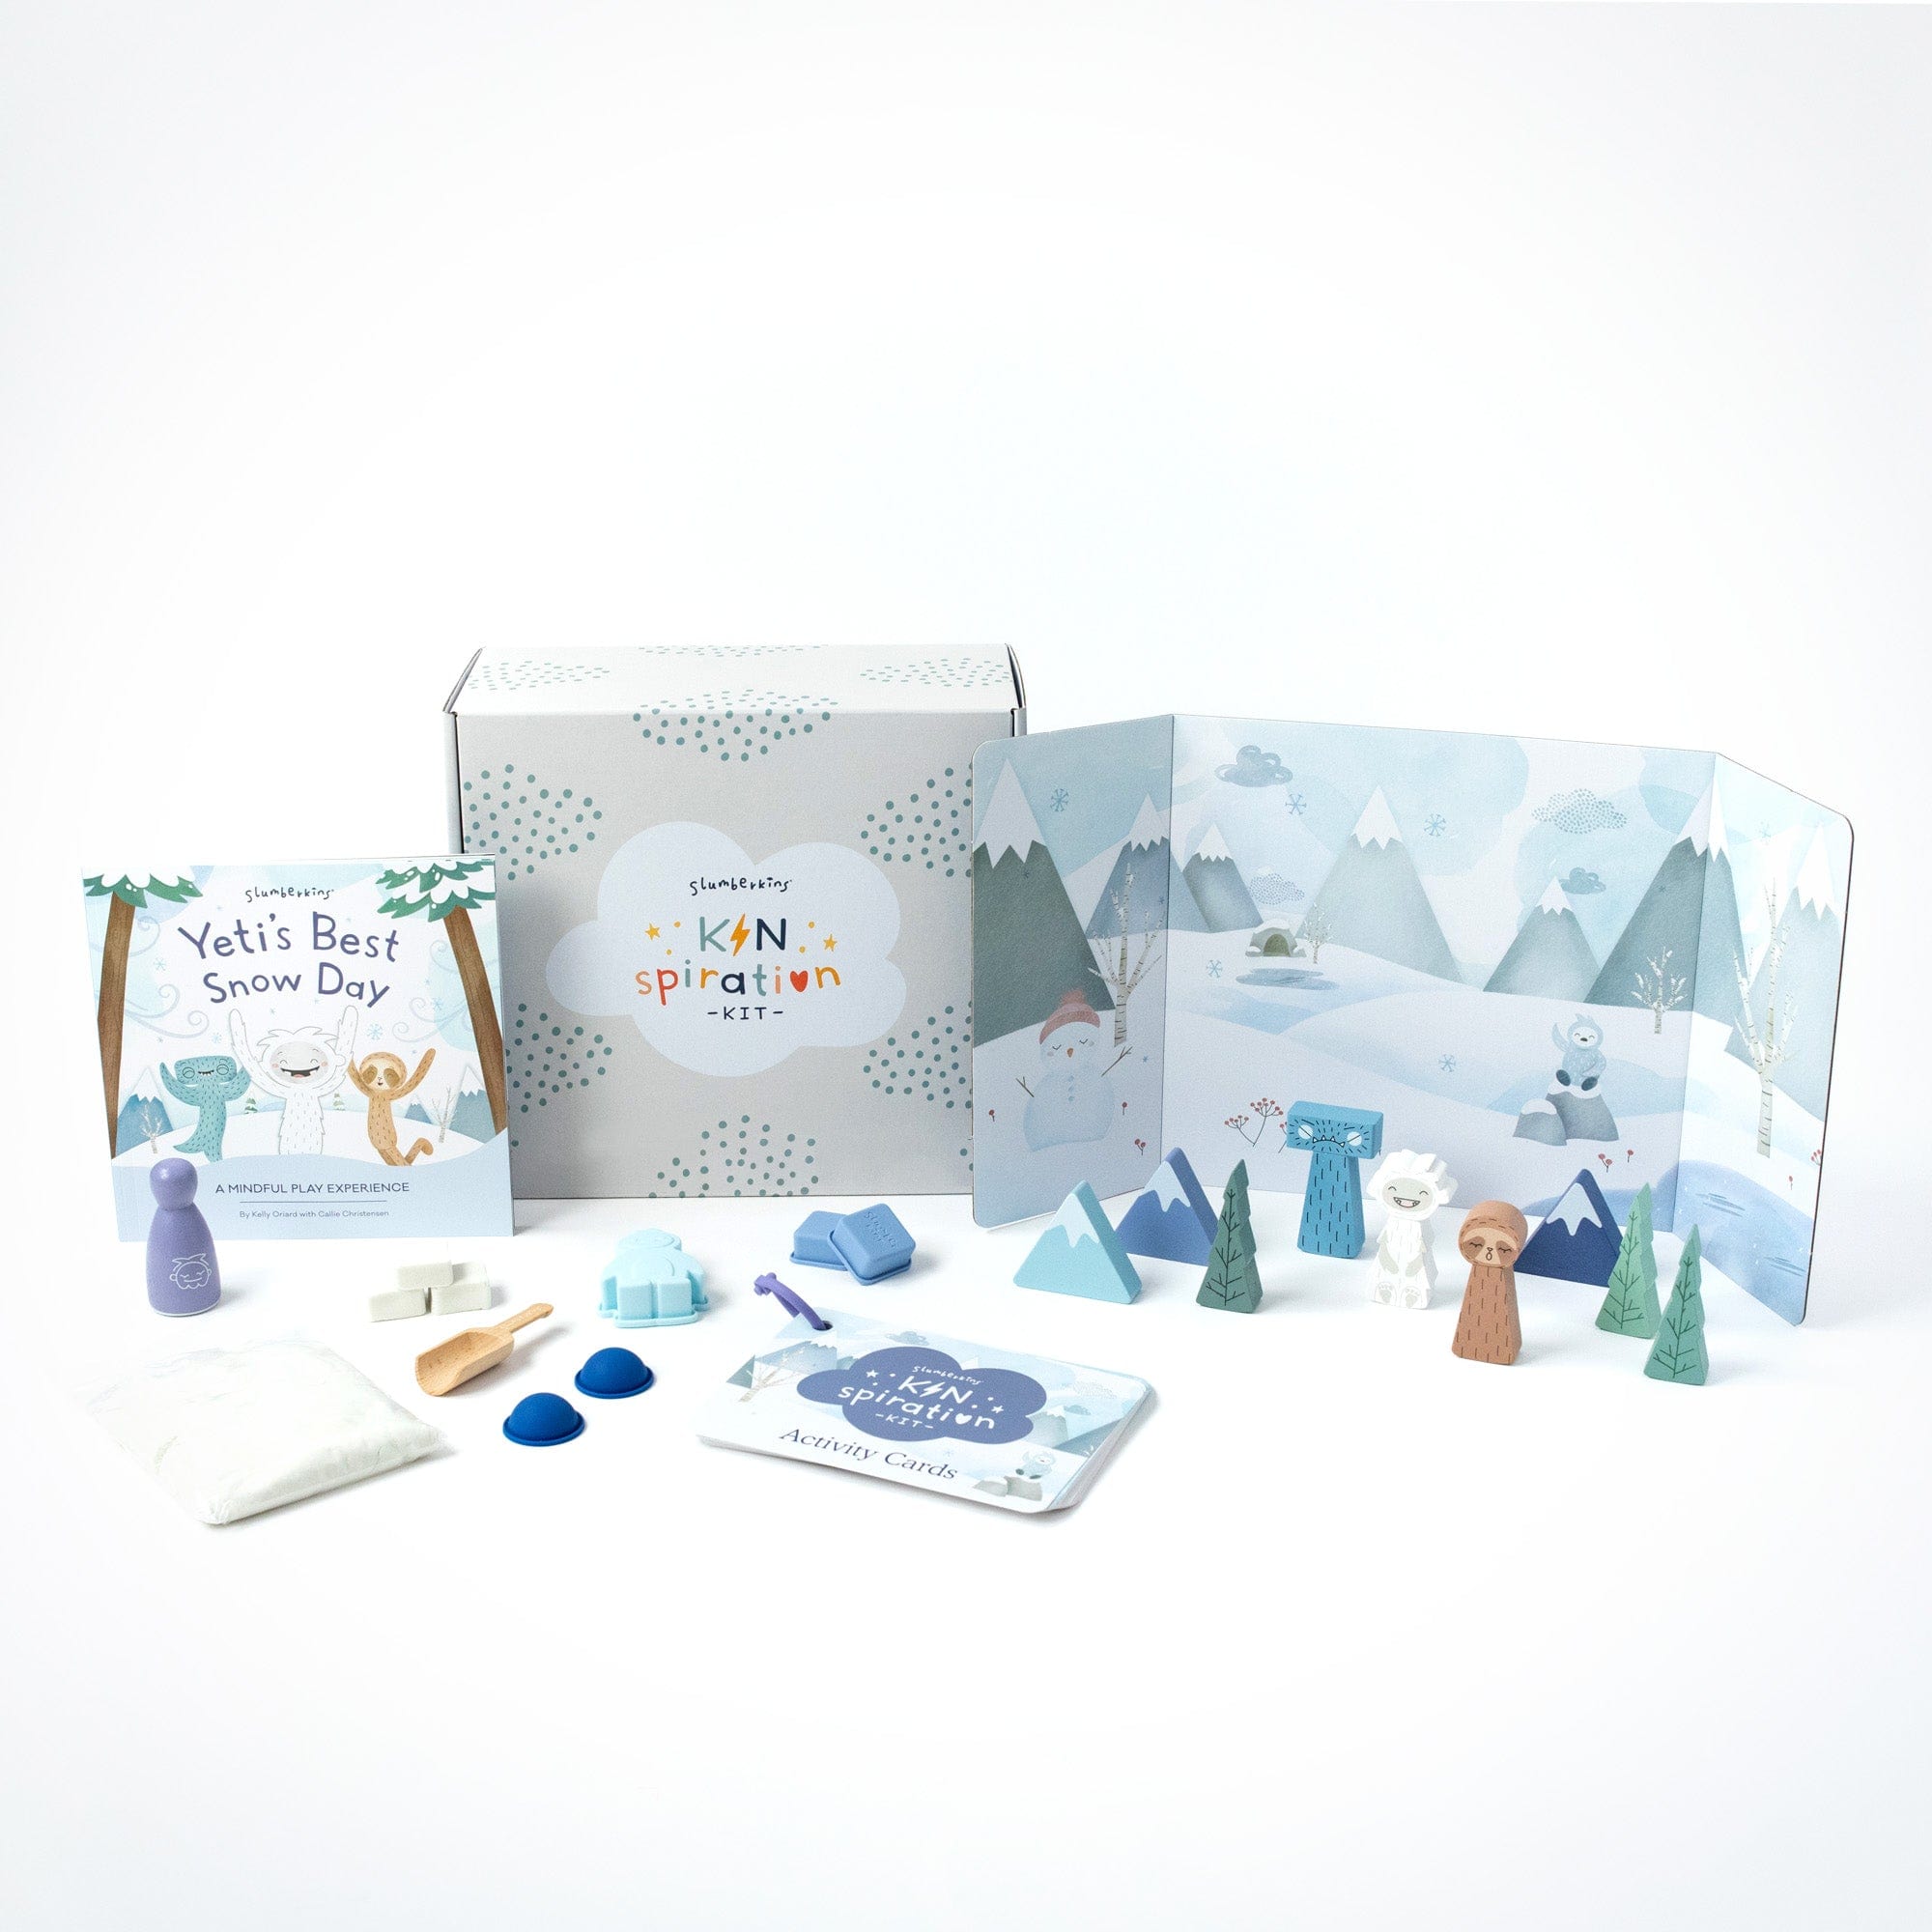 Kinspiration Kit 2-Box Set: Mindful & Expressive Play